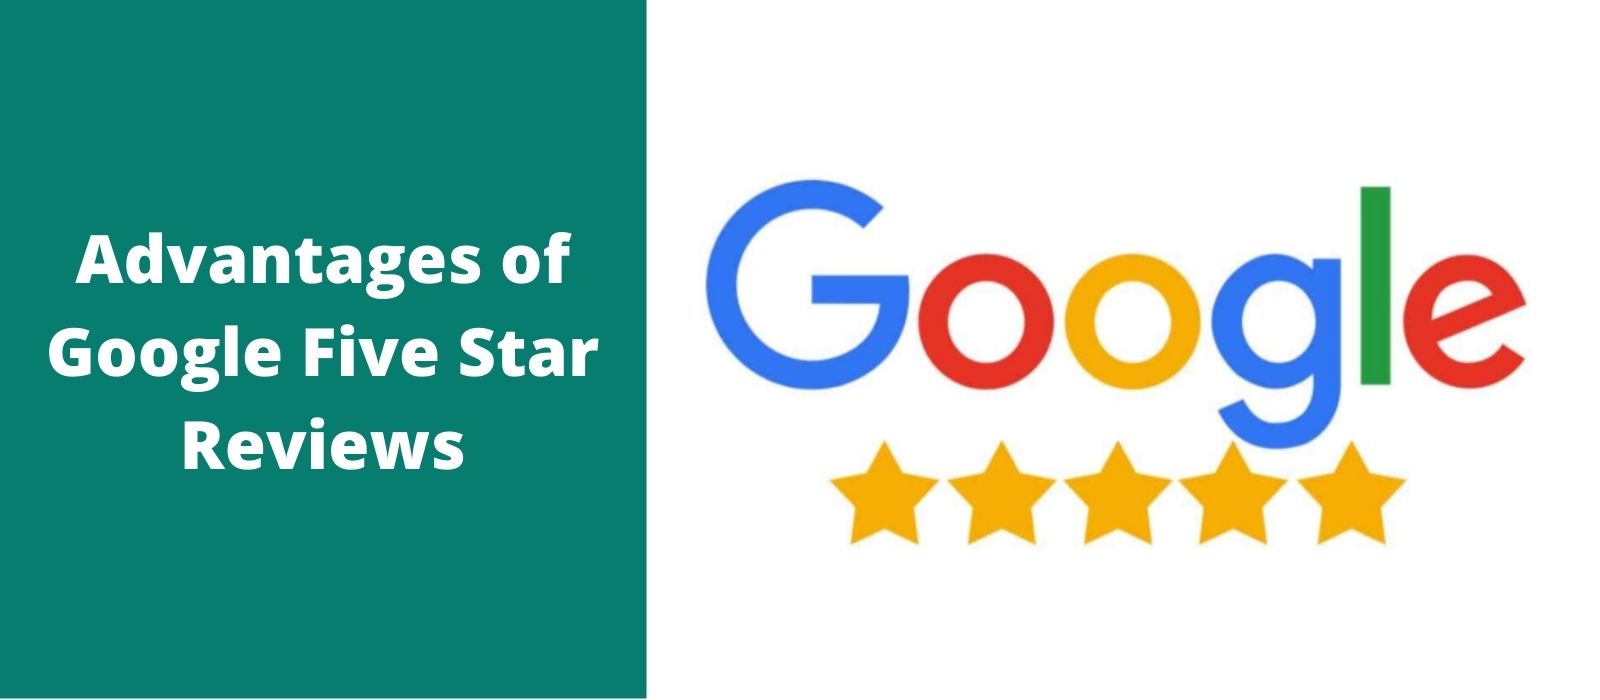 Advantages of Google Five Star Reviews